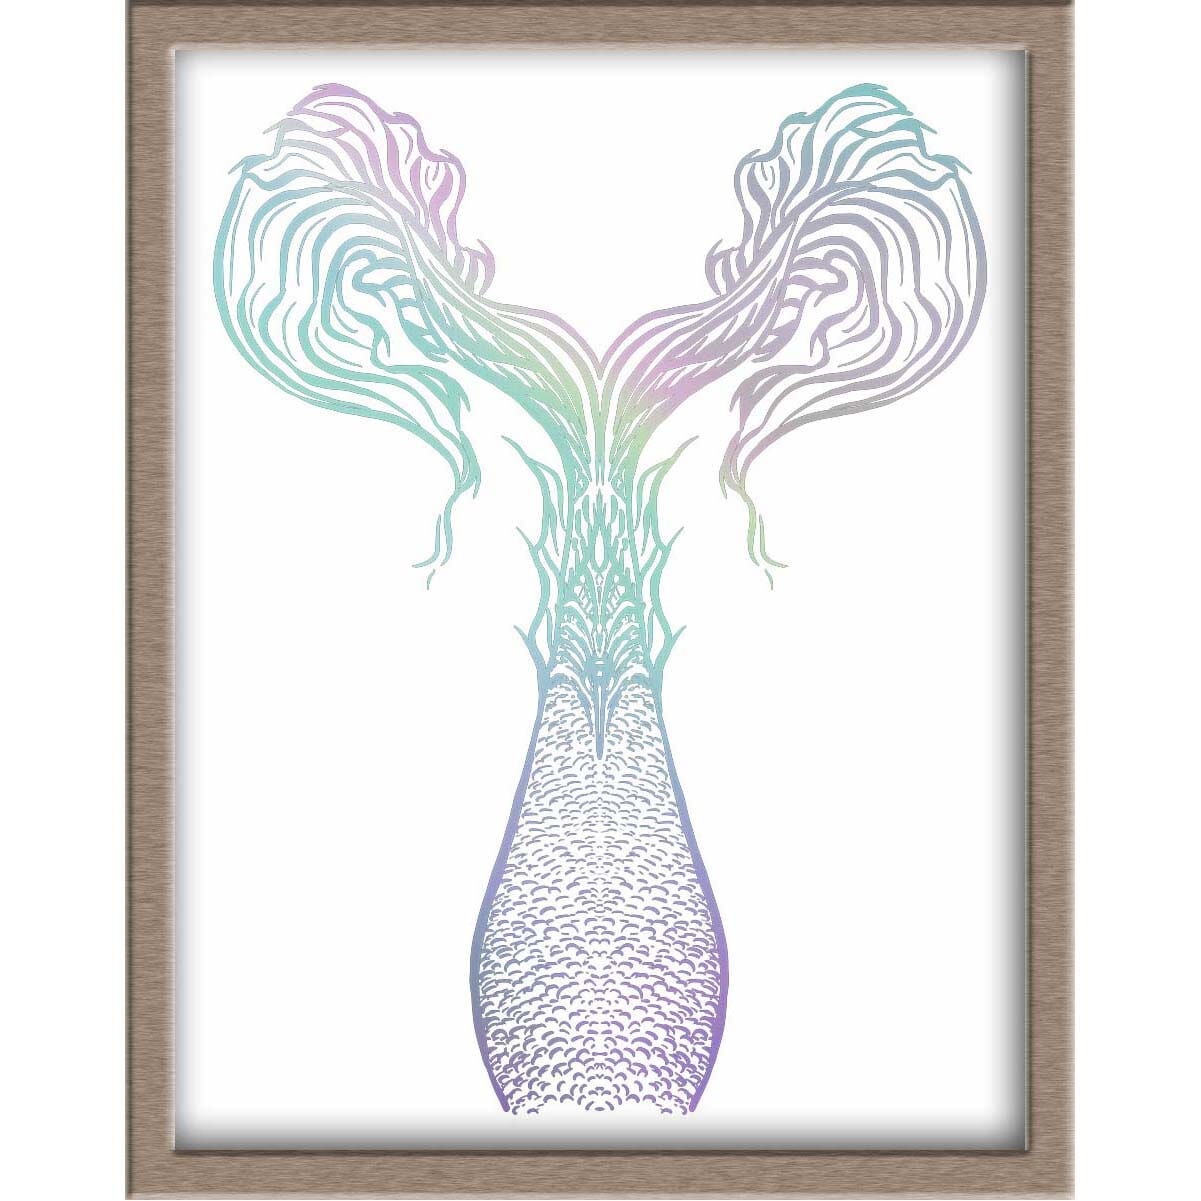 Mermaid Tail 3 Foiled Print Posters, Prints, & Visual Artwork JoyousJoyfulJoyness 